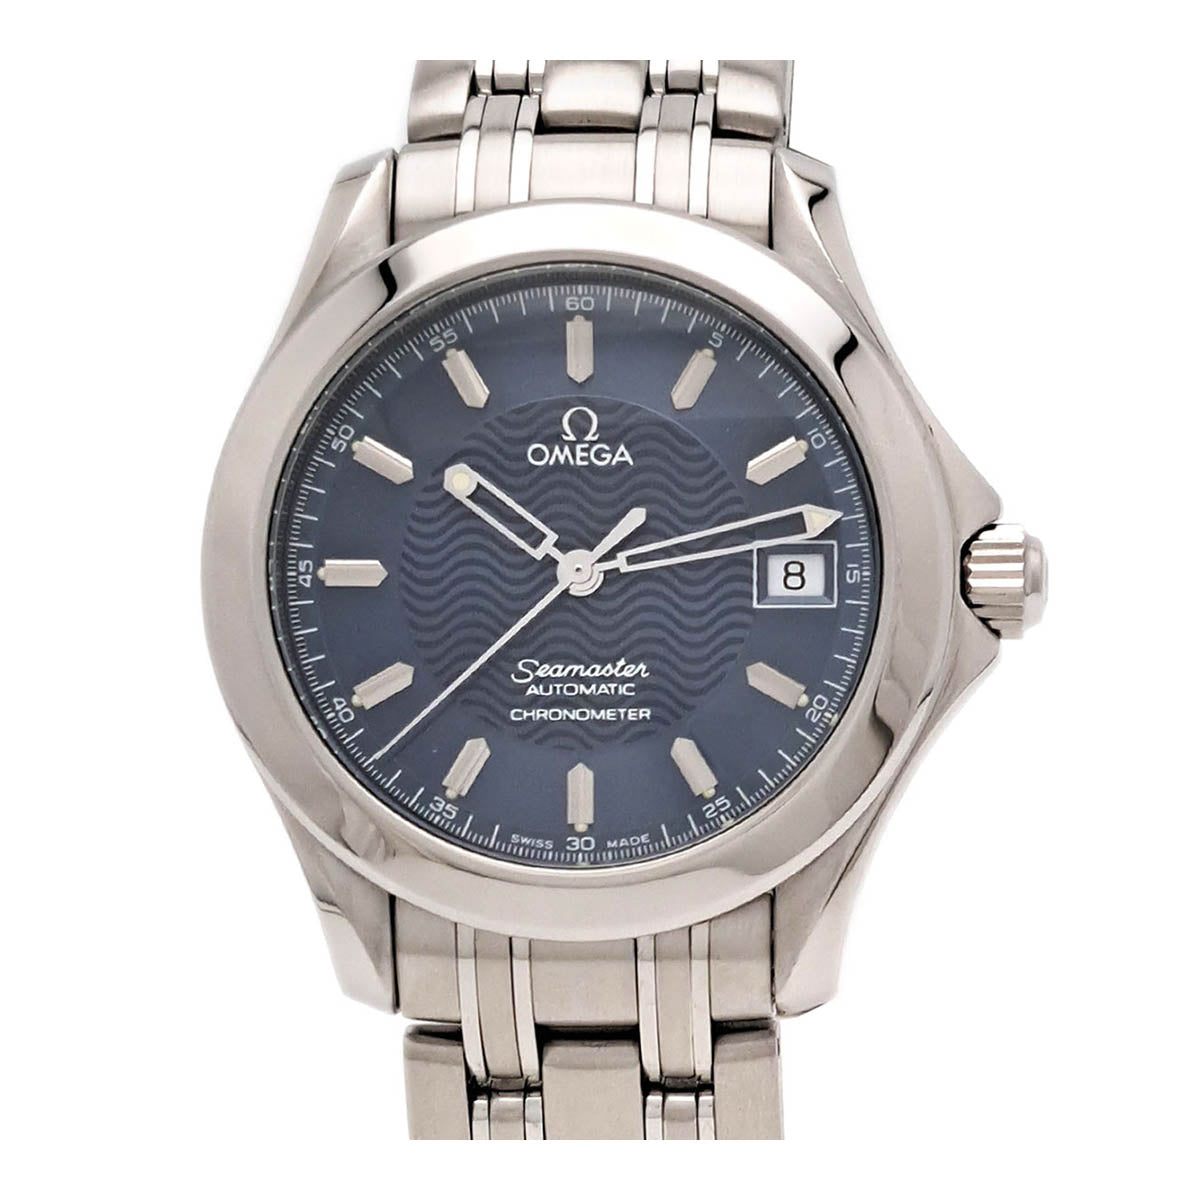 OMEGA SeaMaster 120m Stainless Steel Men's Watch, Model 2501.81 2501.81